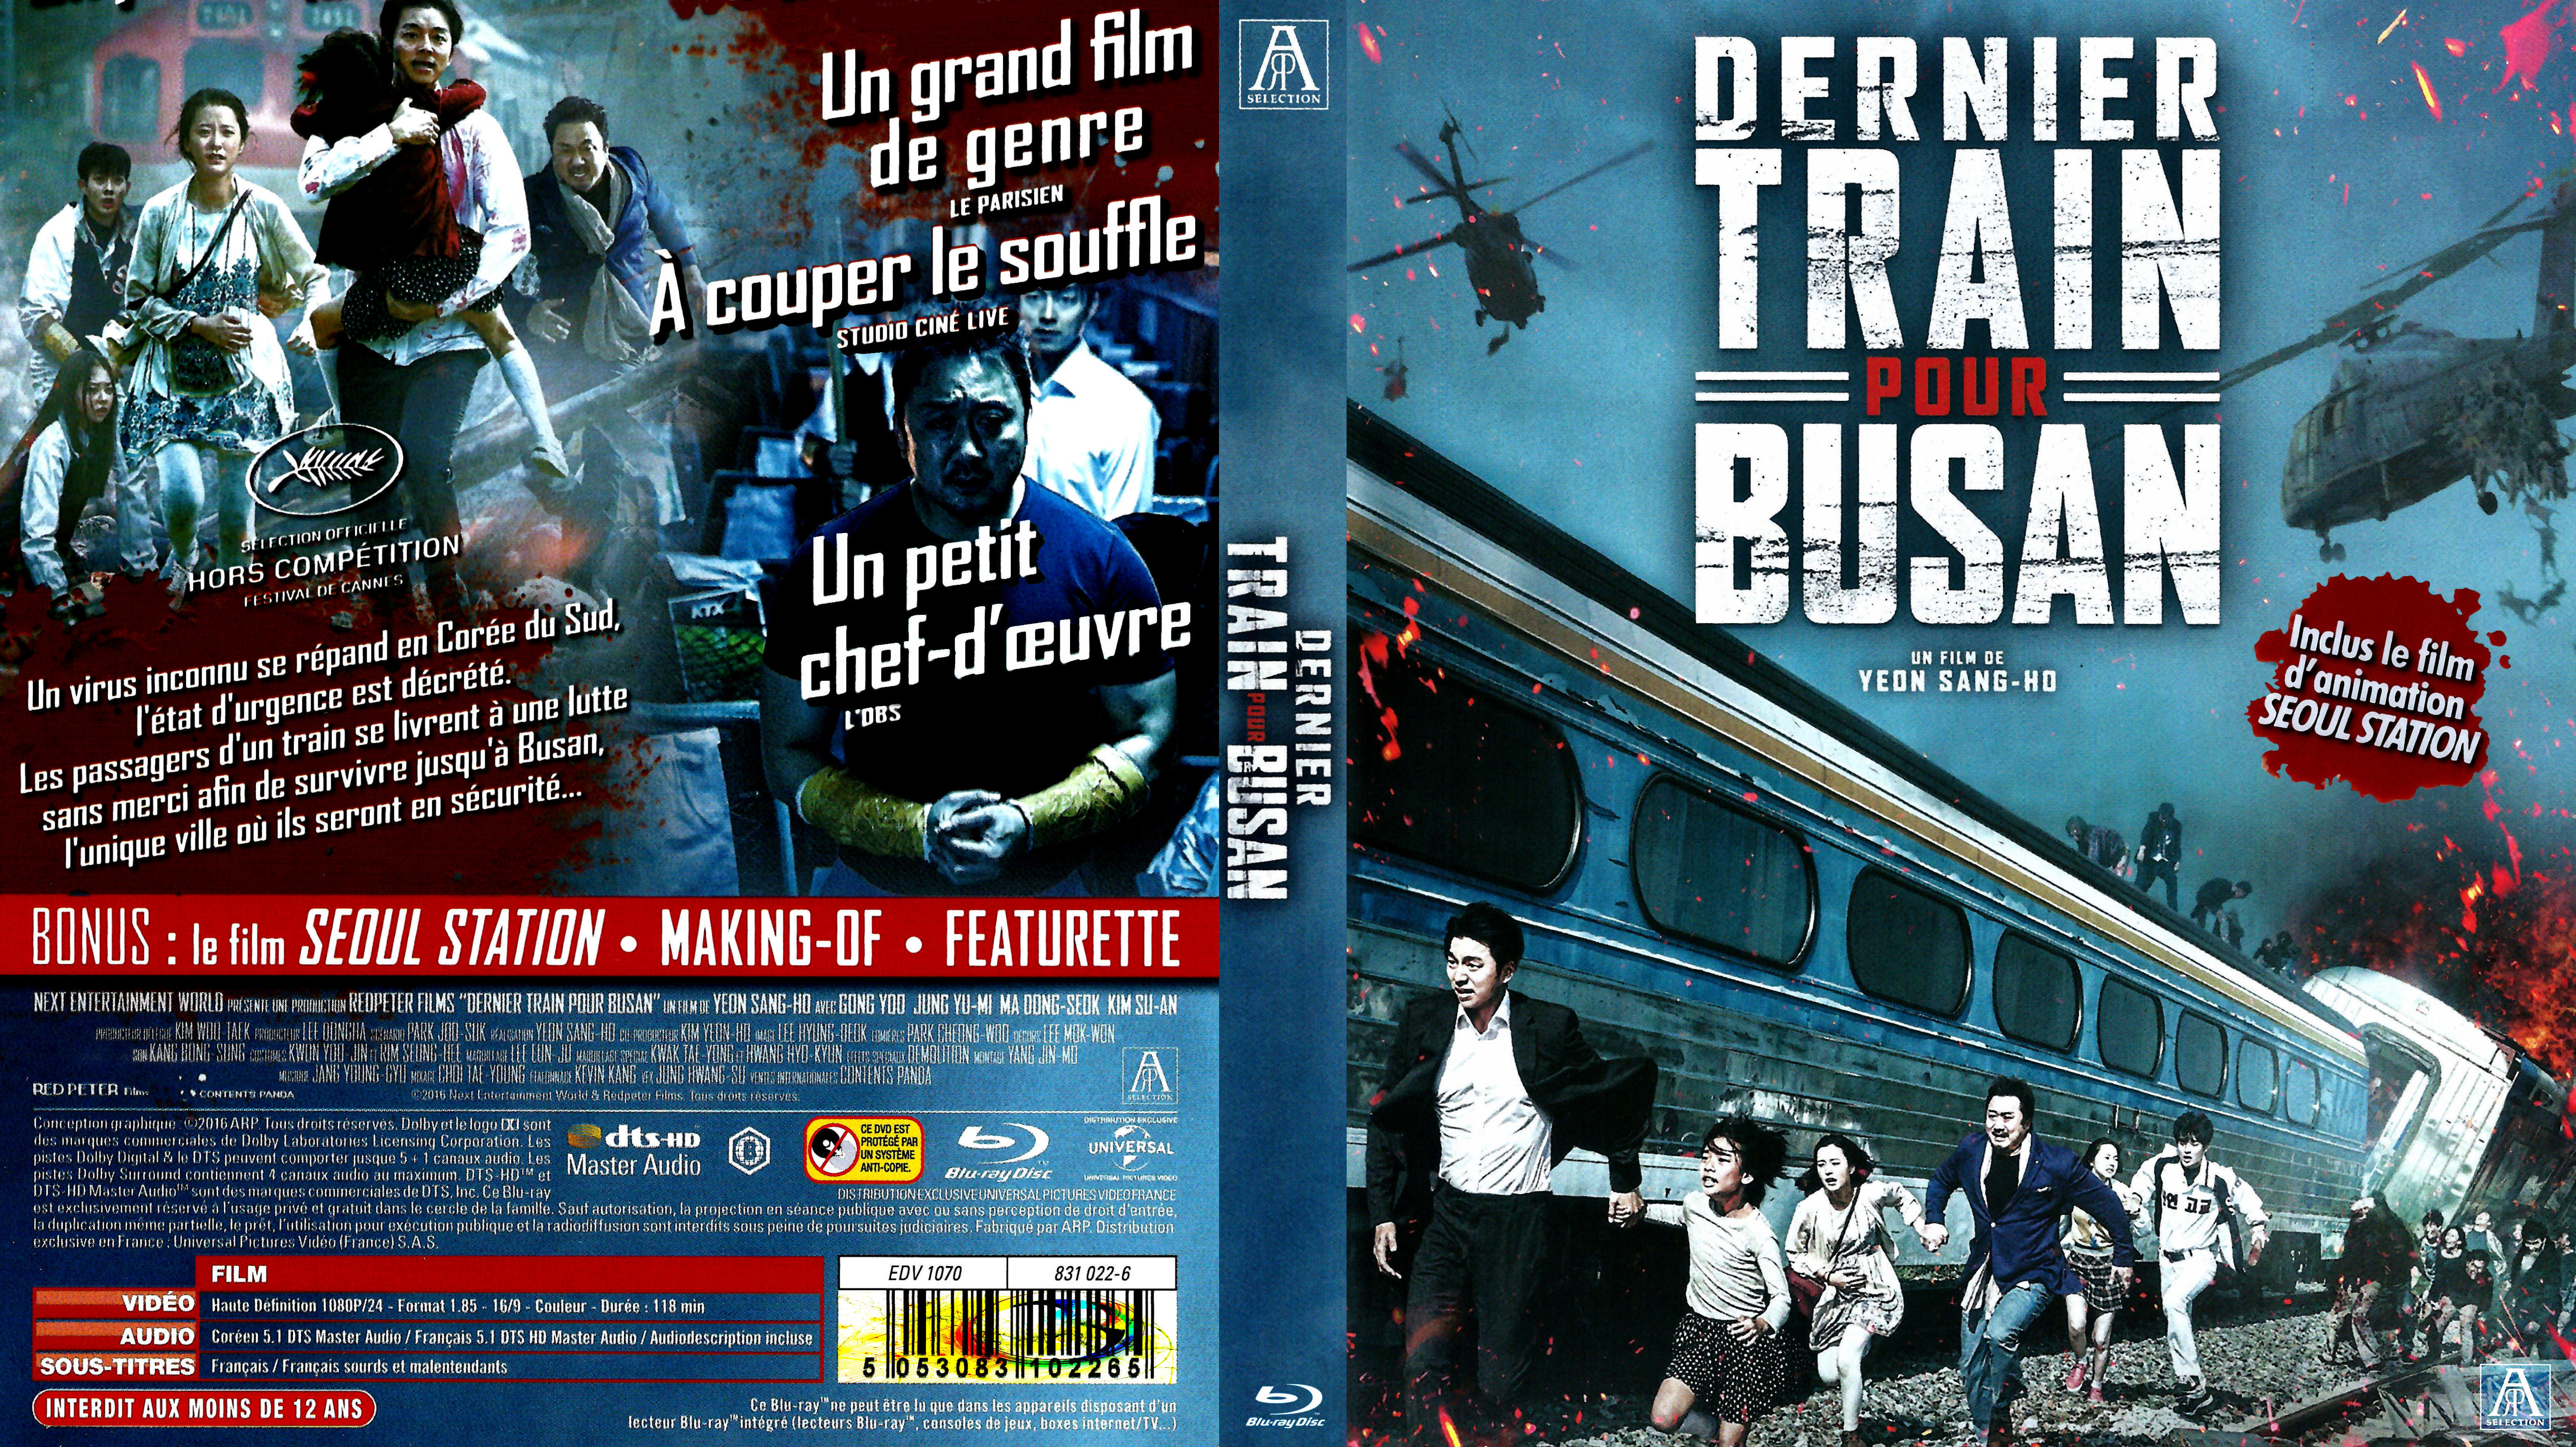 Jaquette DVD Dernier train pour busan (BLU-RAY)